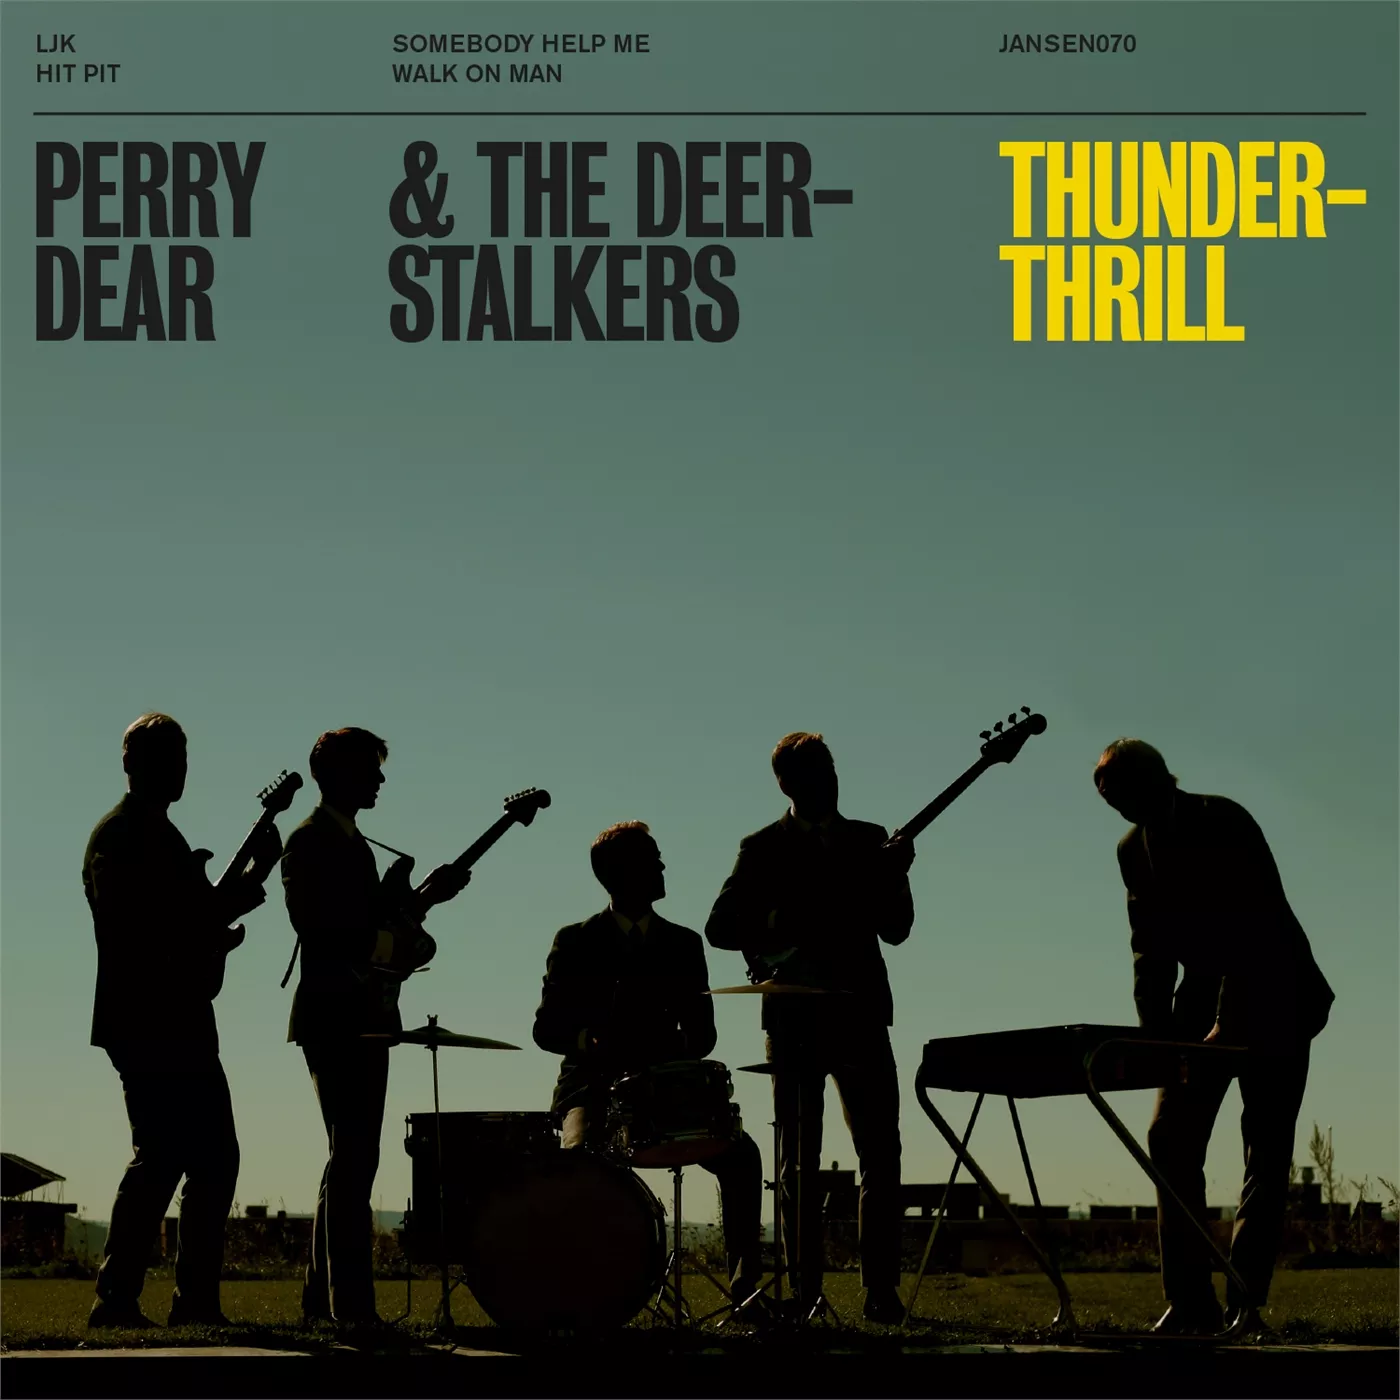 Thunderthrill - Perry Dear & The Deerstalkers